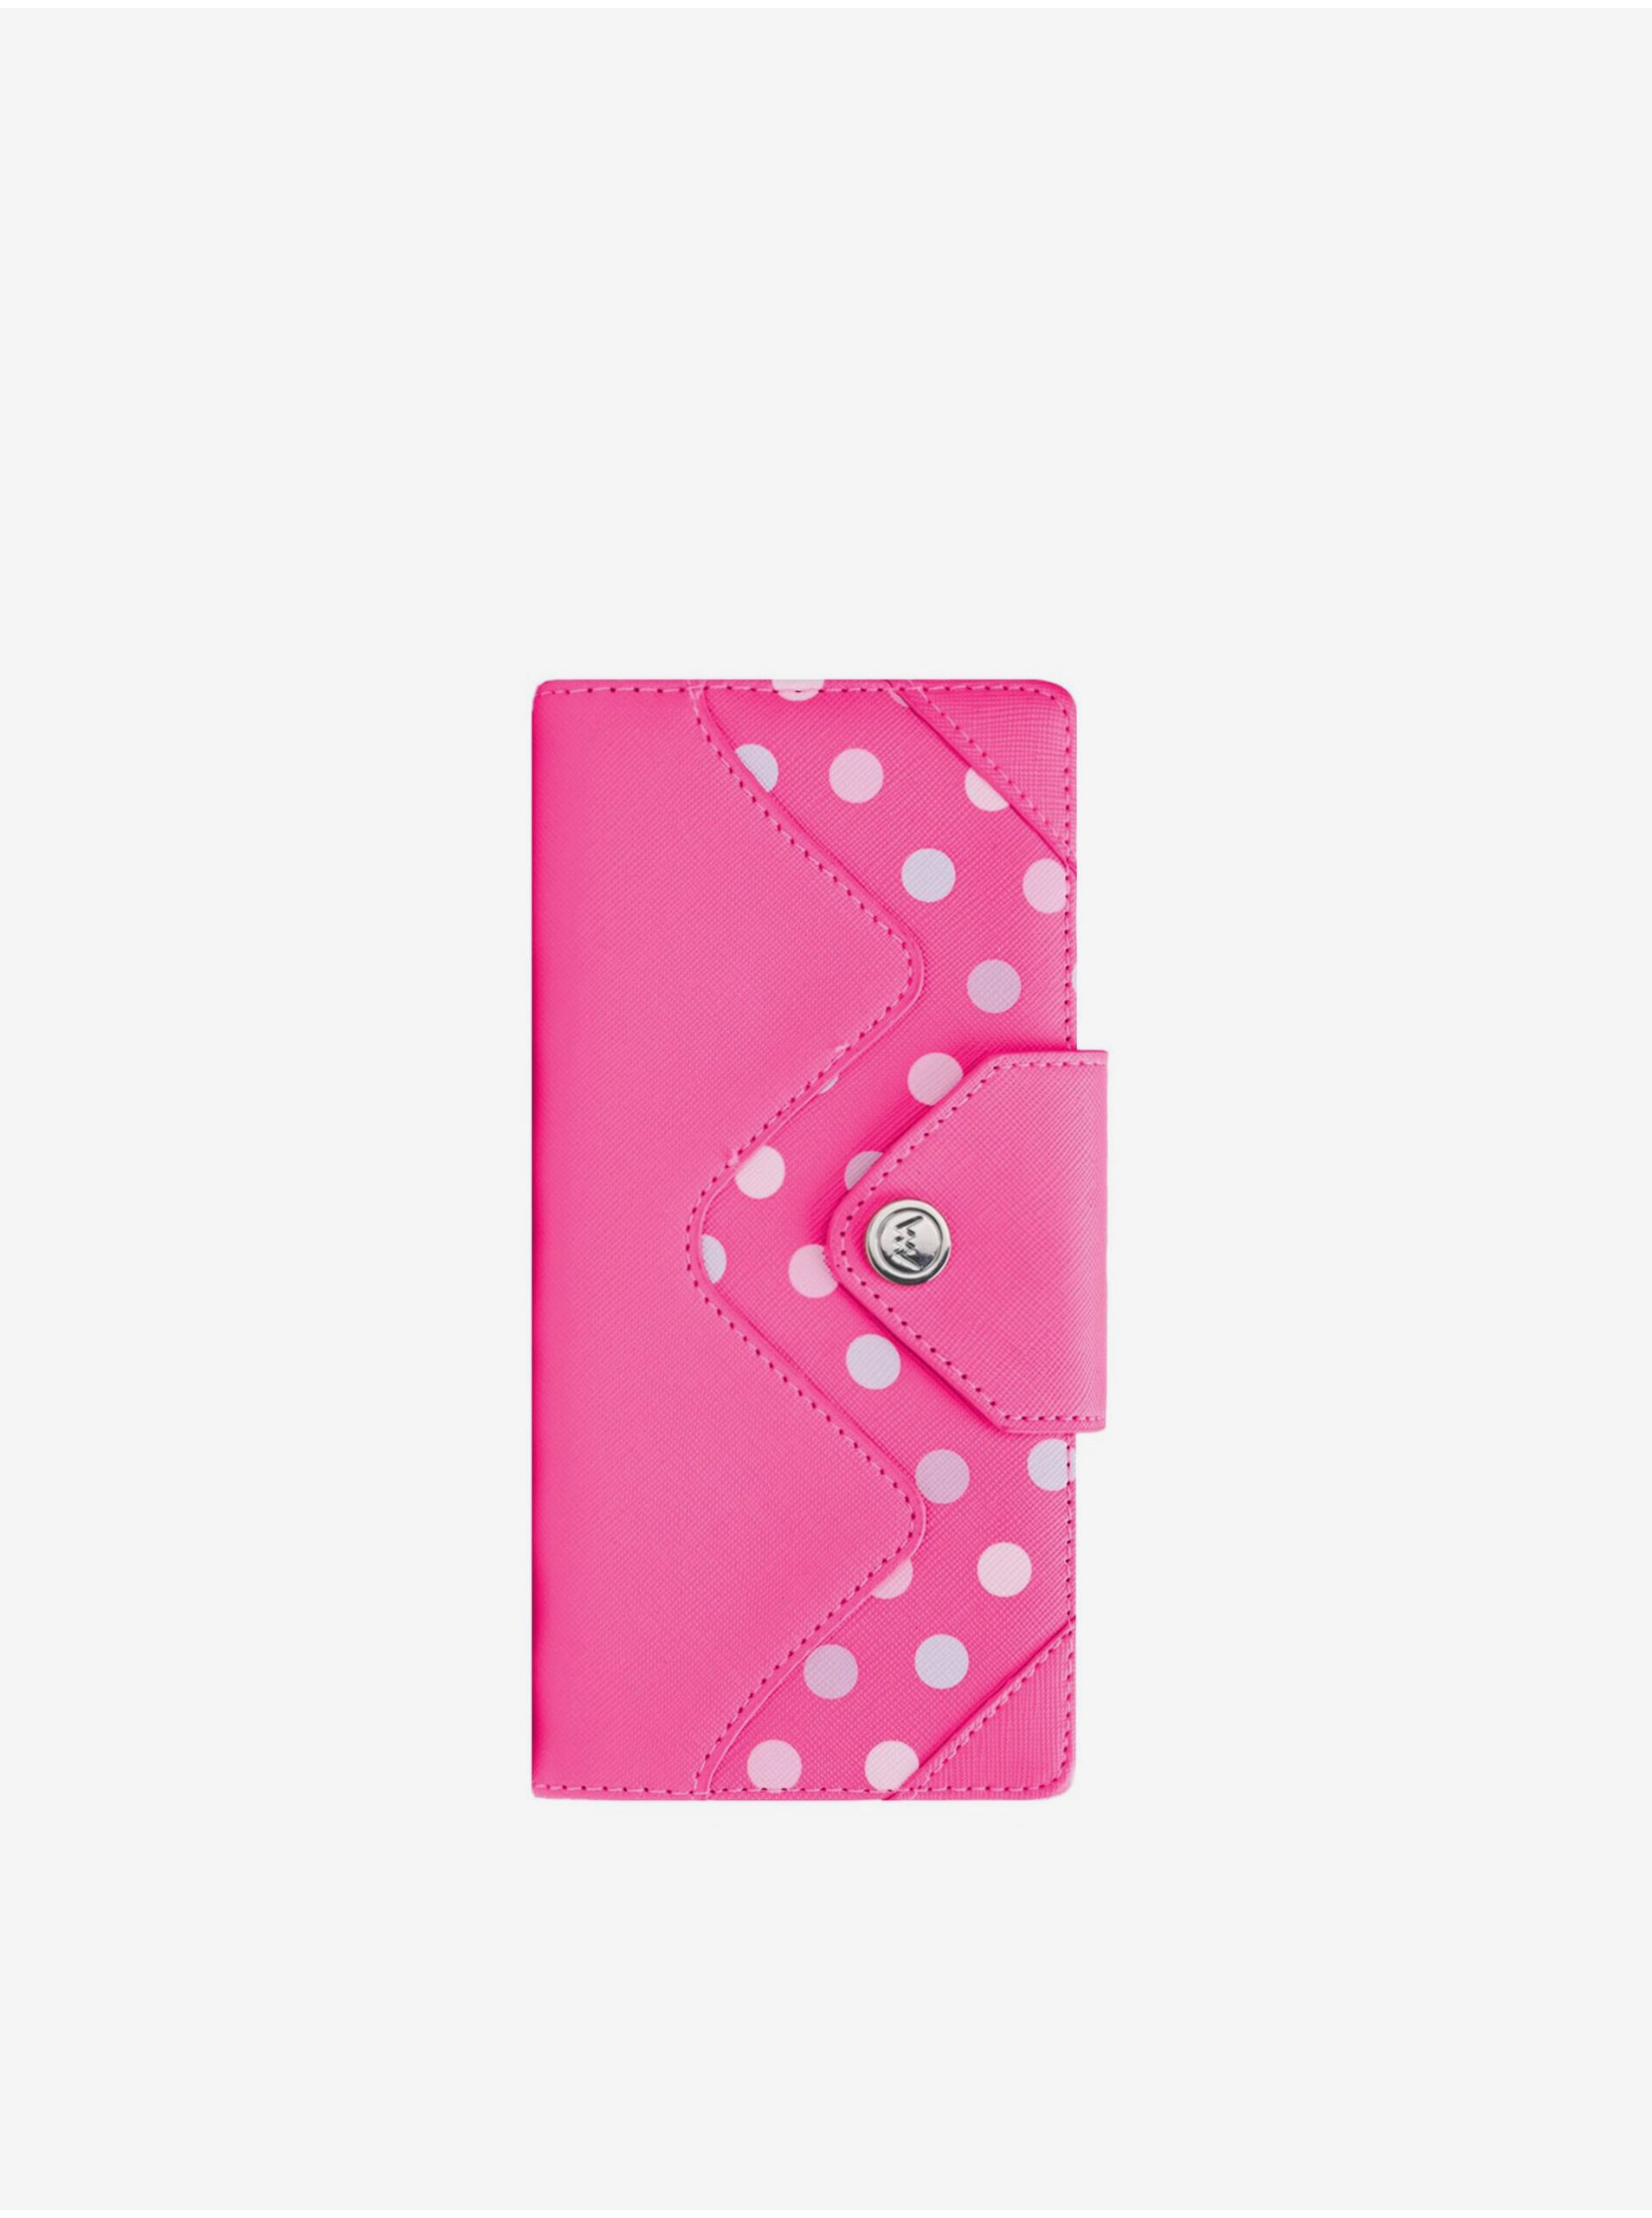 Lacno Ružová dámska bodkovaná peňaženka VuchTanita Pink